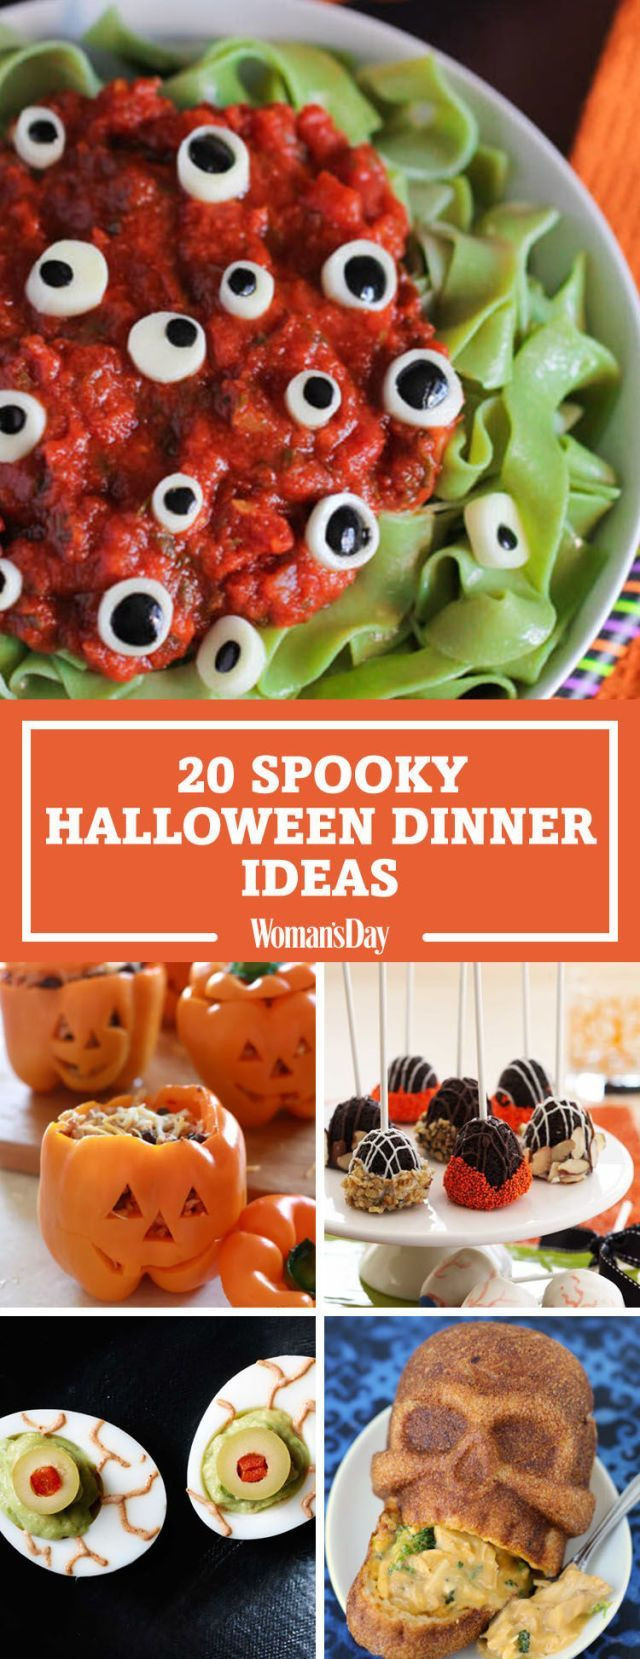 Fun Halloween Dinners Ideas
 25 Spooky Halloween Dinner Ideas